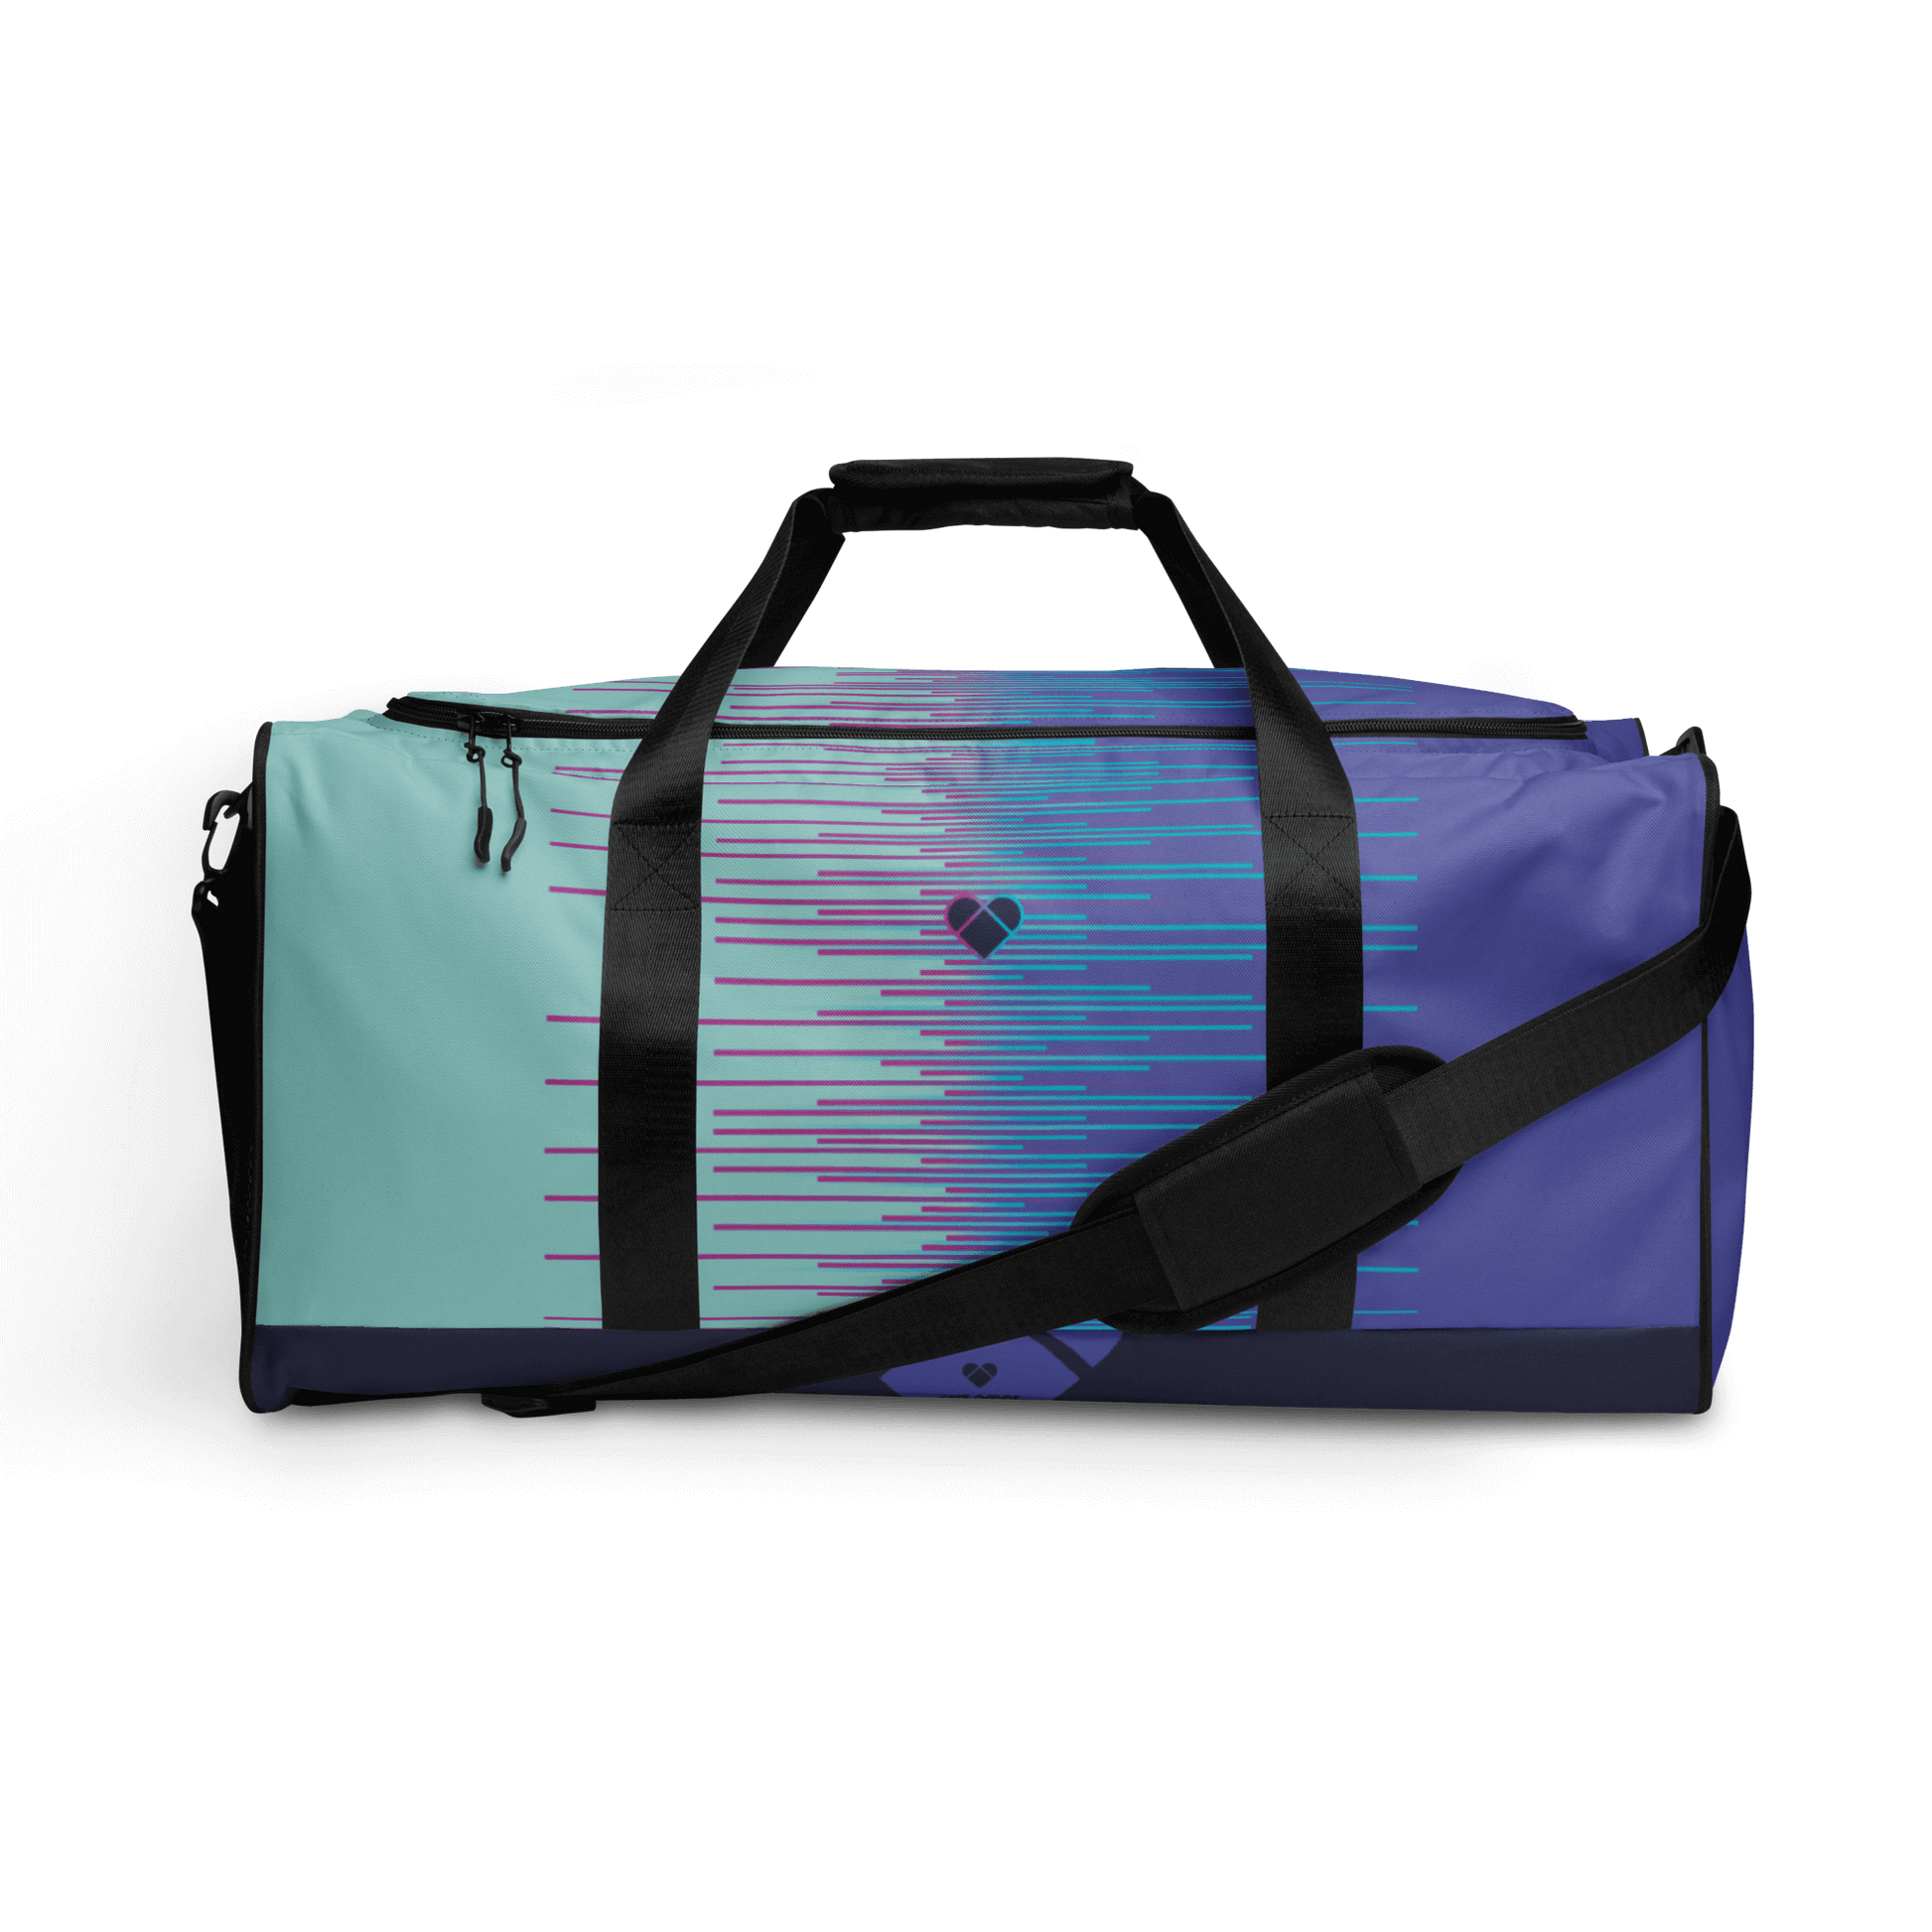 Mint & Periwinkle Dual Duffle Bag by CRiZ AMOR